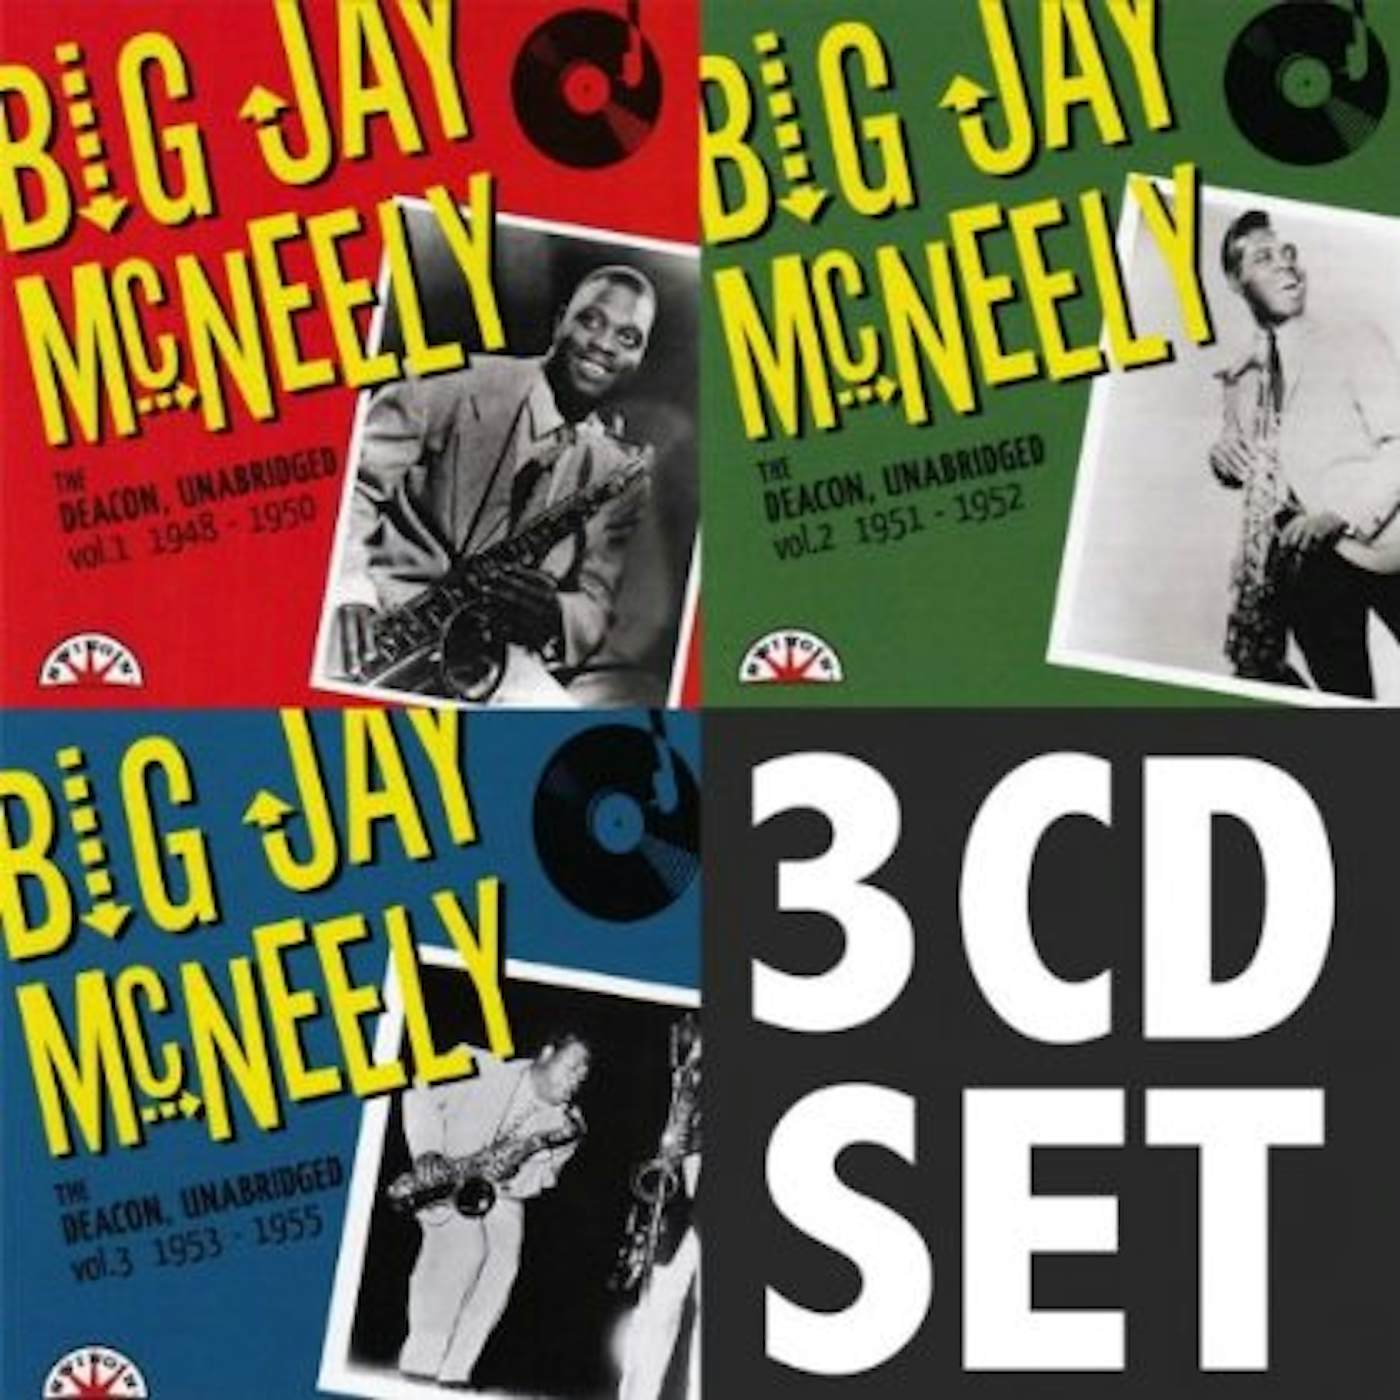 Big Jay McNeely THE DEACON UNABRIDGED 1948-1955 3CD SET CD